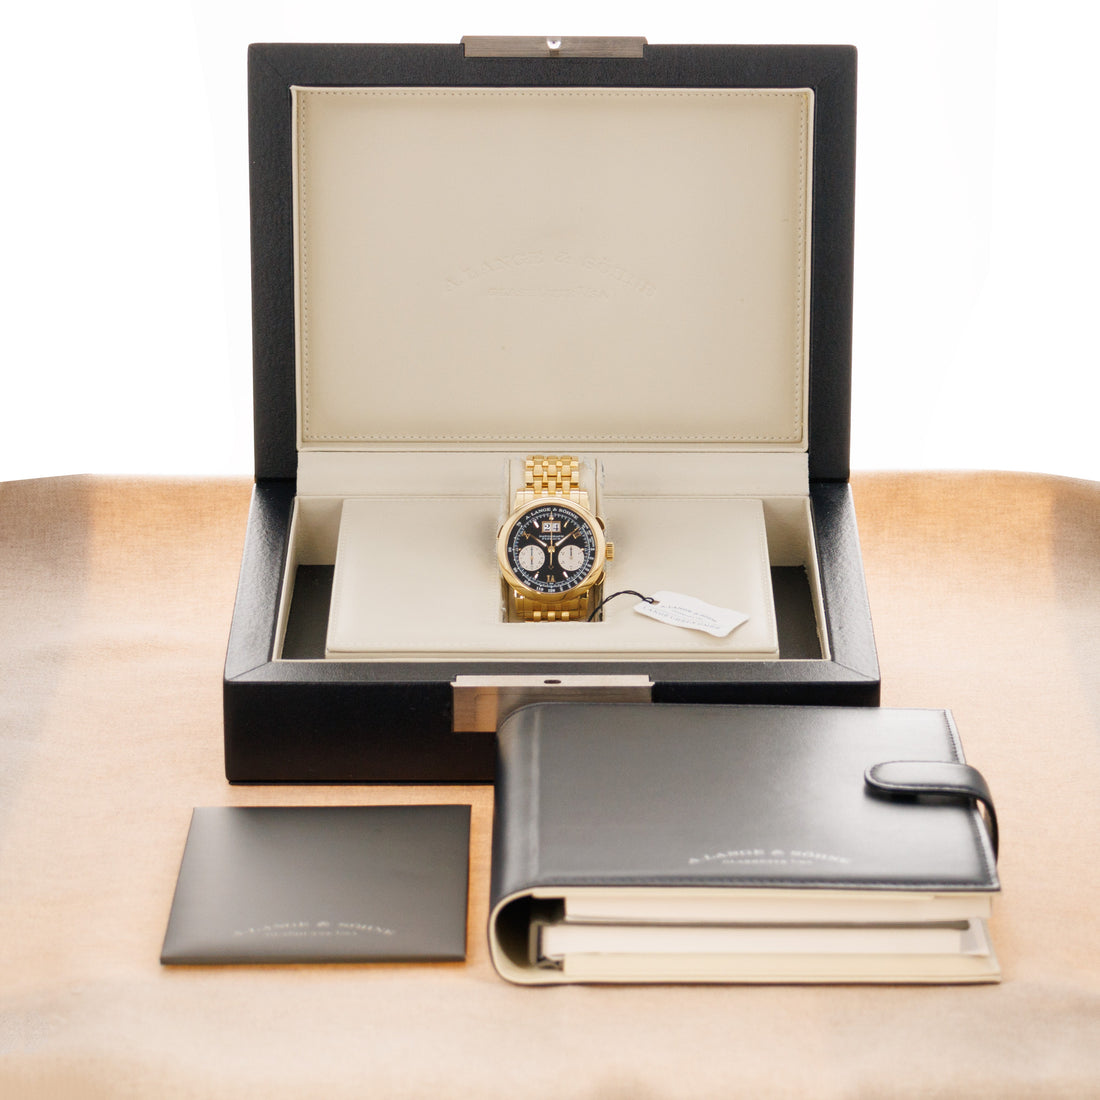 A. Lange & Sohne Yellow Gold Datograph Watch Ref. 403.041 on Wellendorf Bracelet